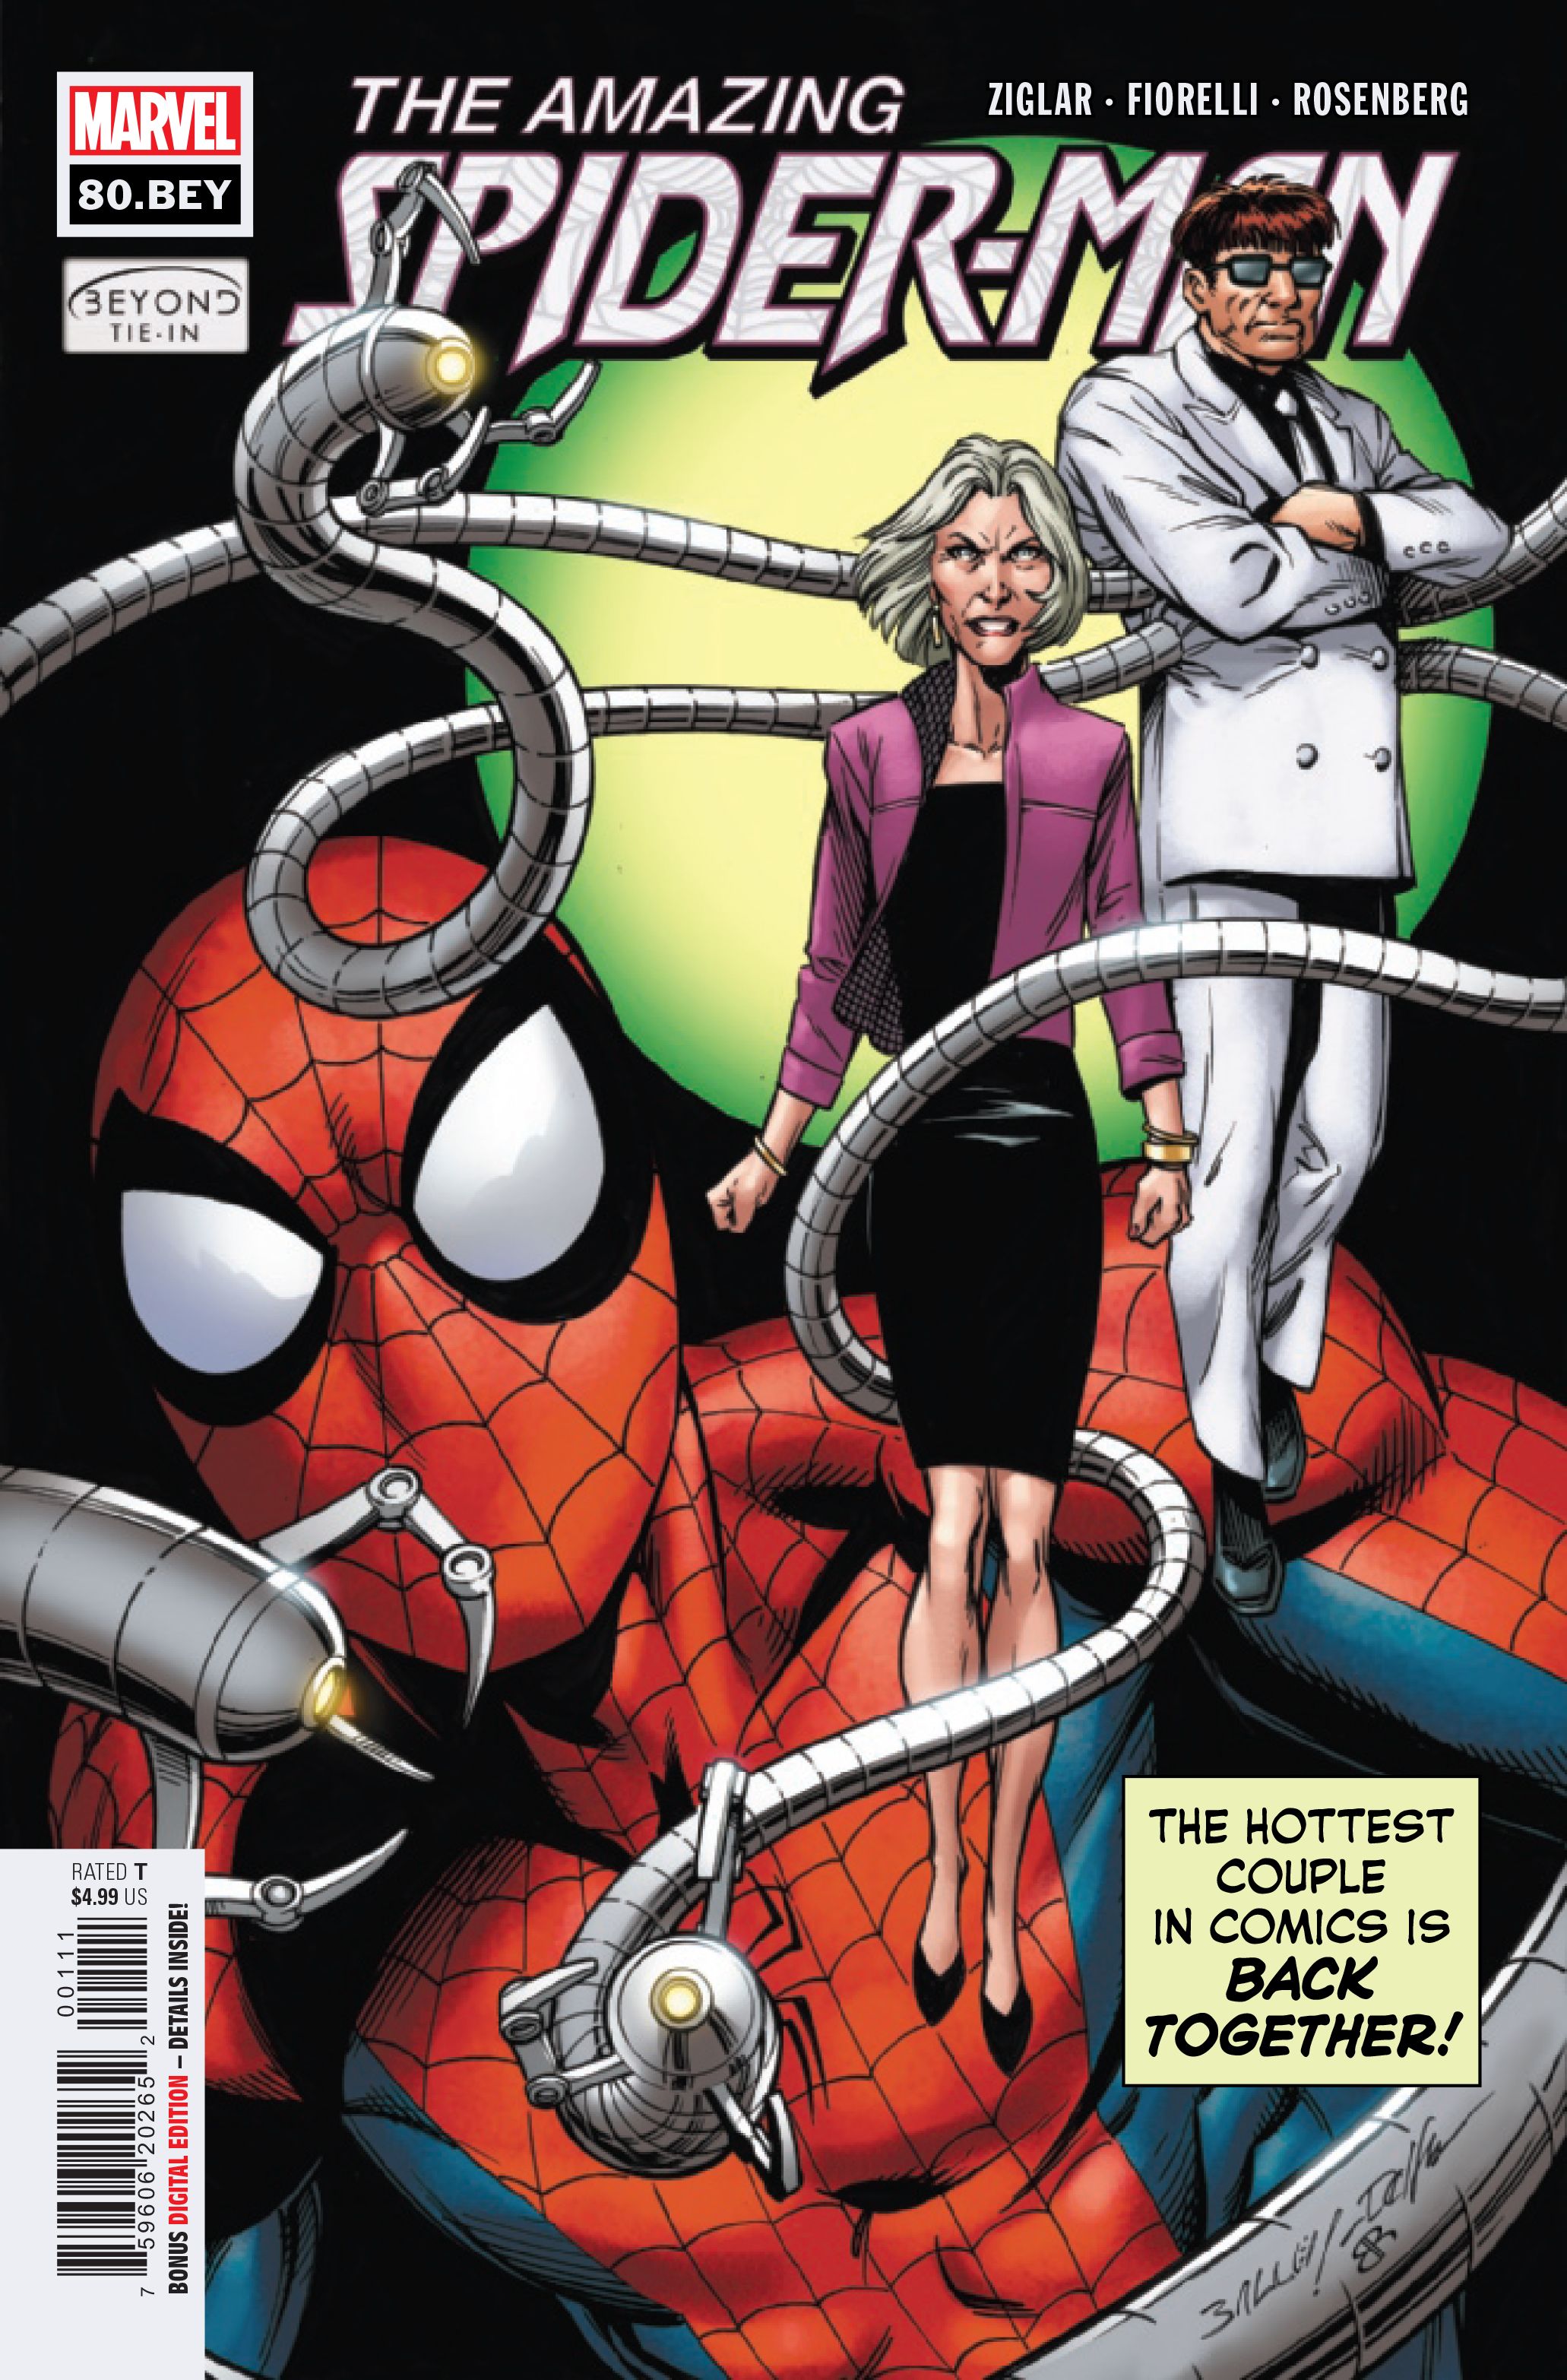 Cover for Amazing Spider-Man #80.BEY, by Cody Ziglar, Ivan Fiorelli, Carlos Gomez and Paco Medina.